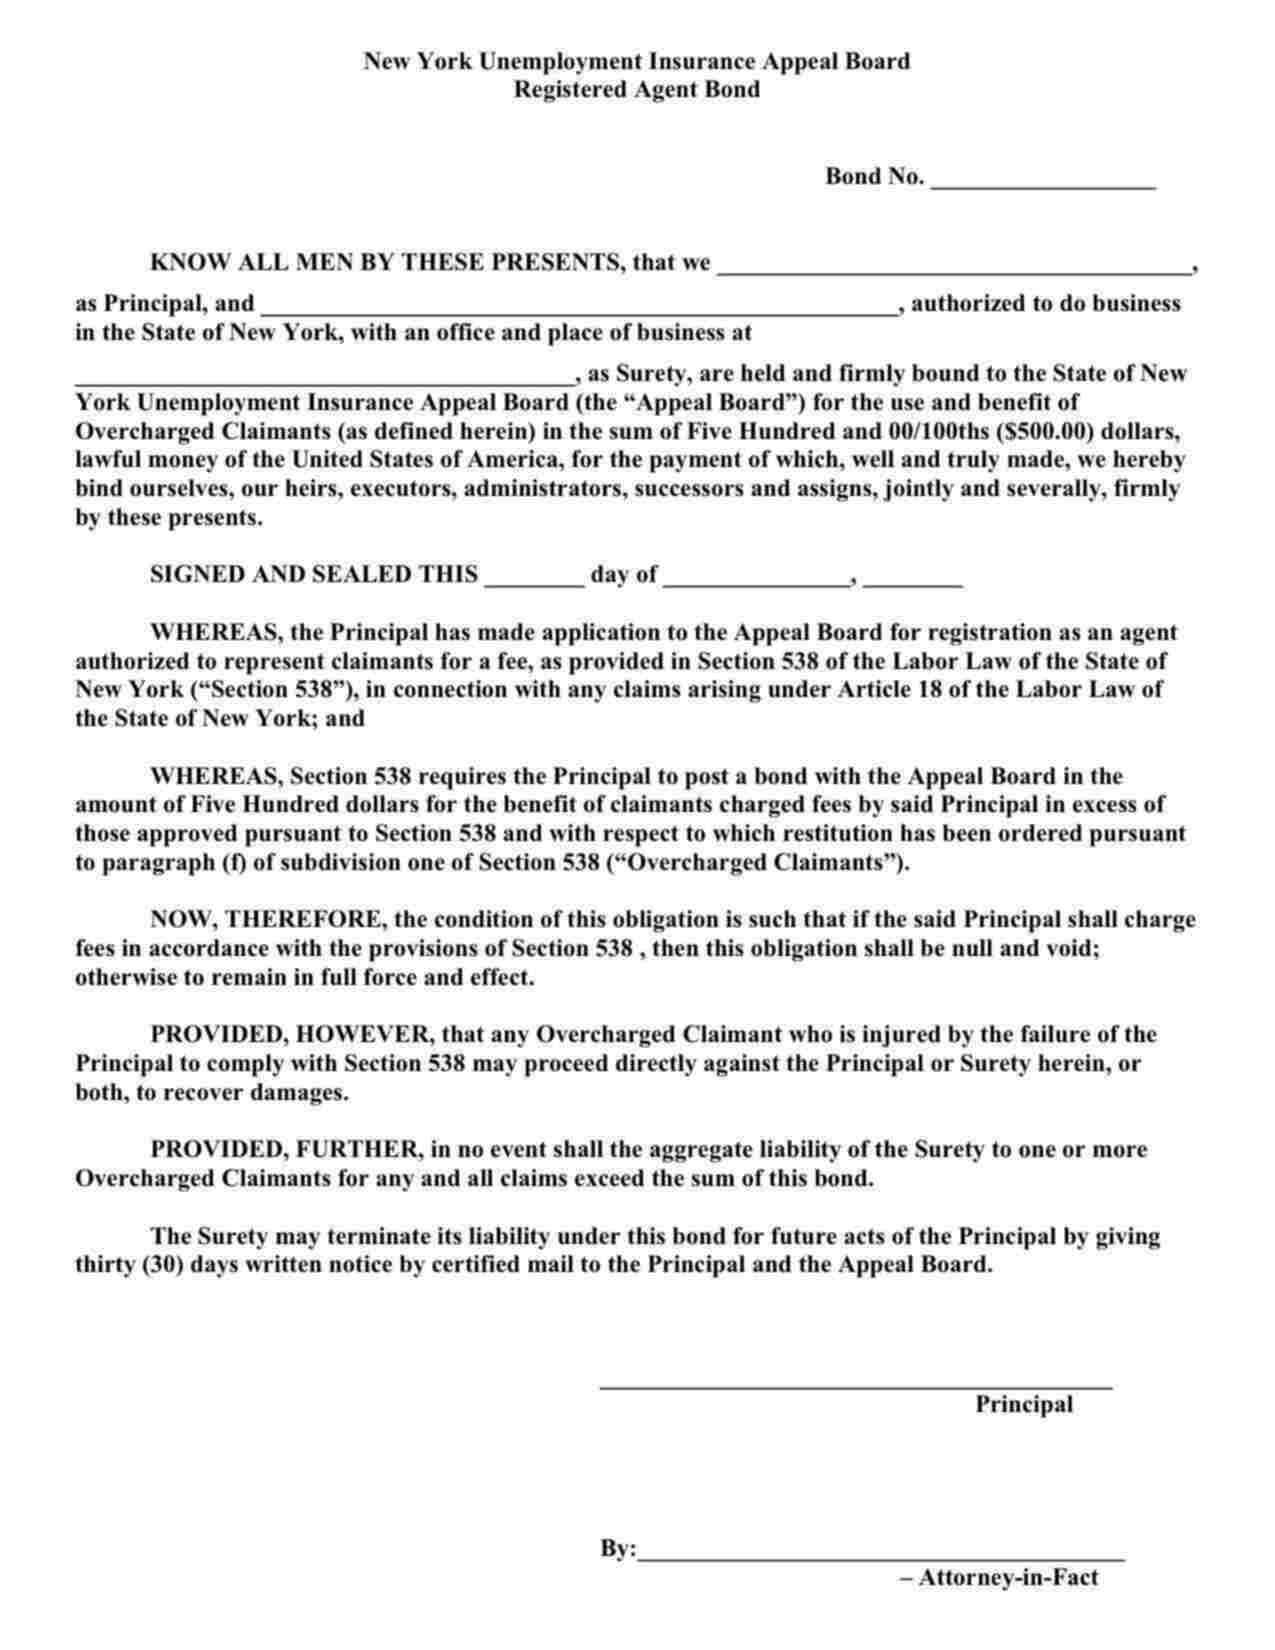 New York Registered Agent (Unemployment Appeal Board) Bond Form